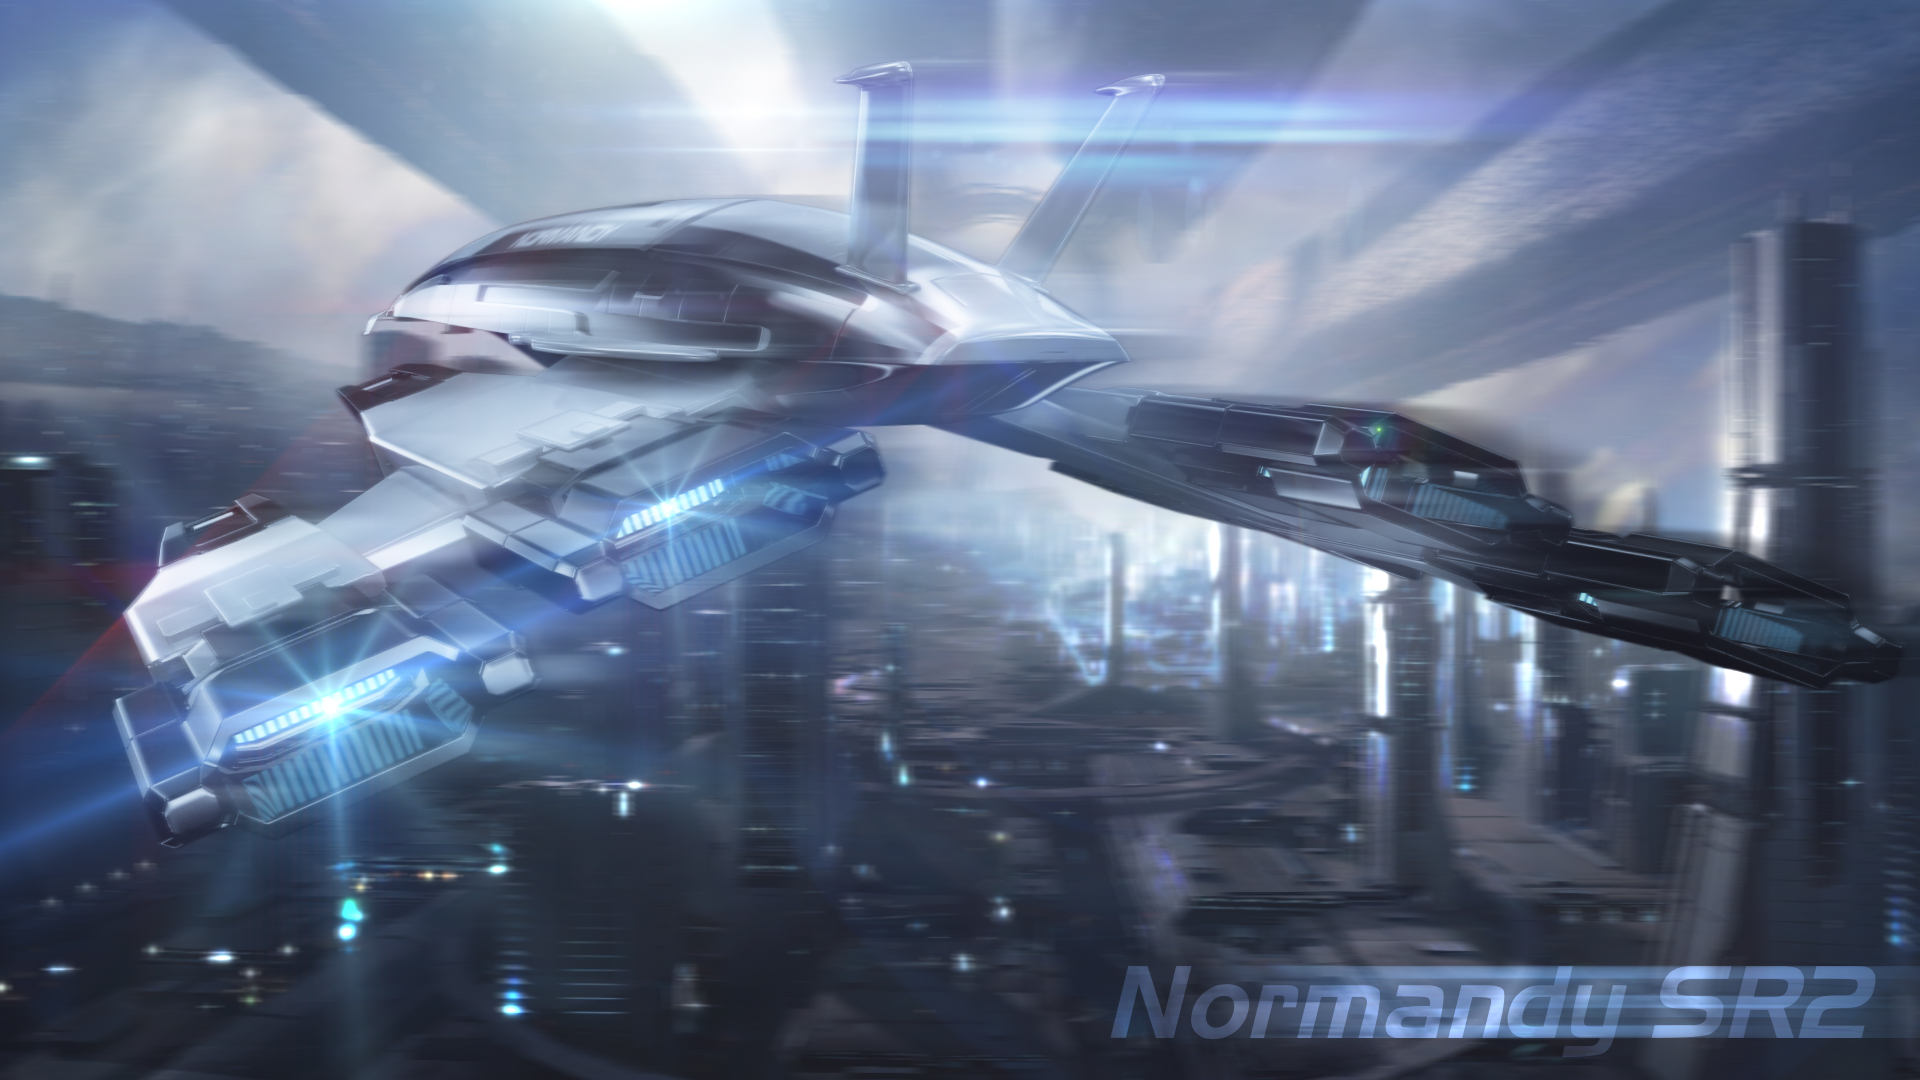 Normandy Mass Effect Spaceships Vehicles Sr2 Space Ship HD Wallpaper